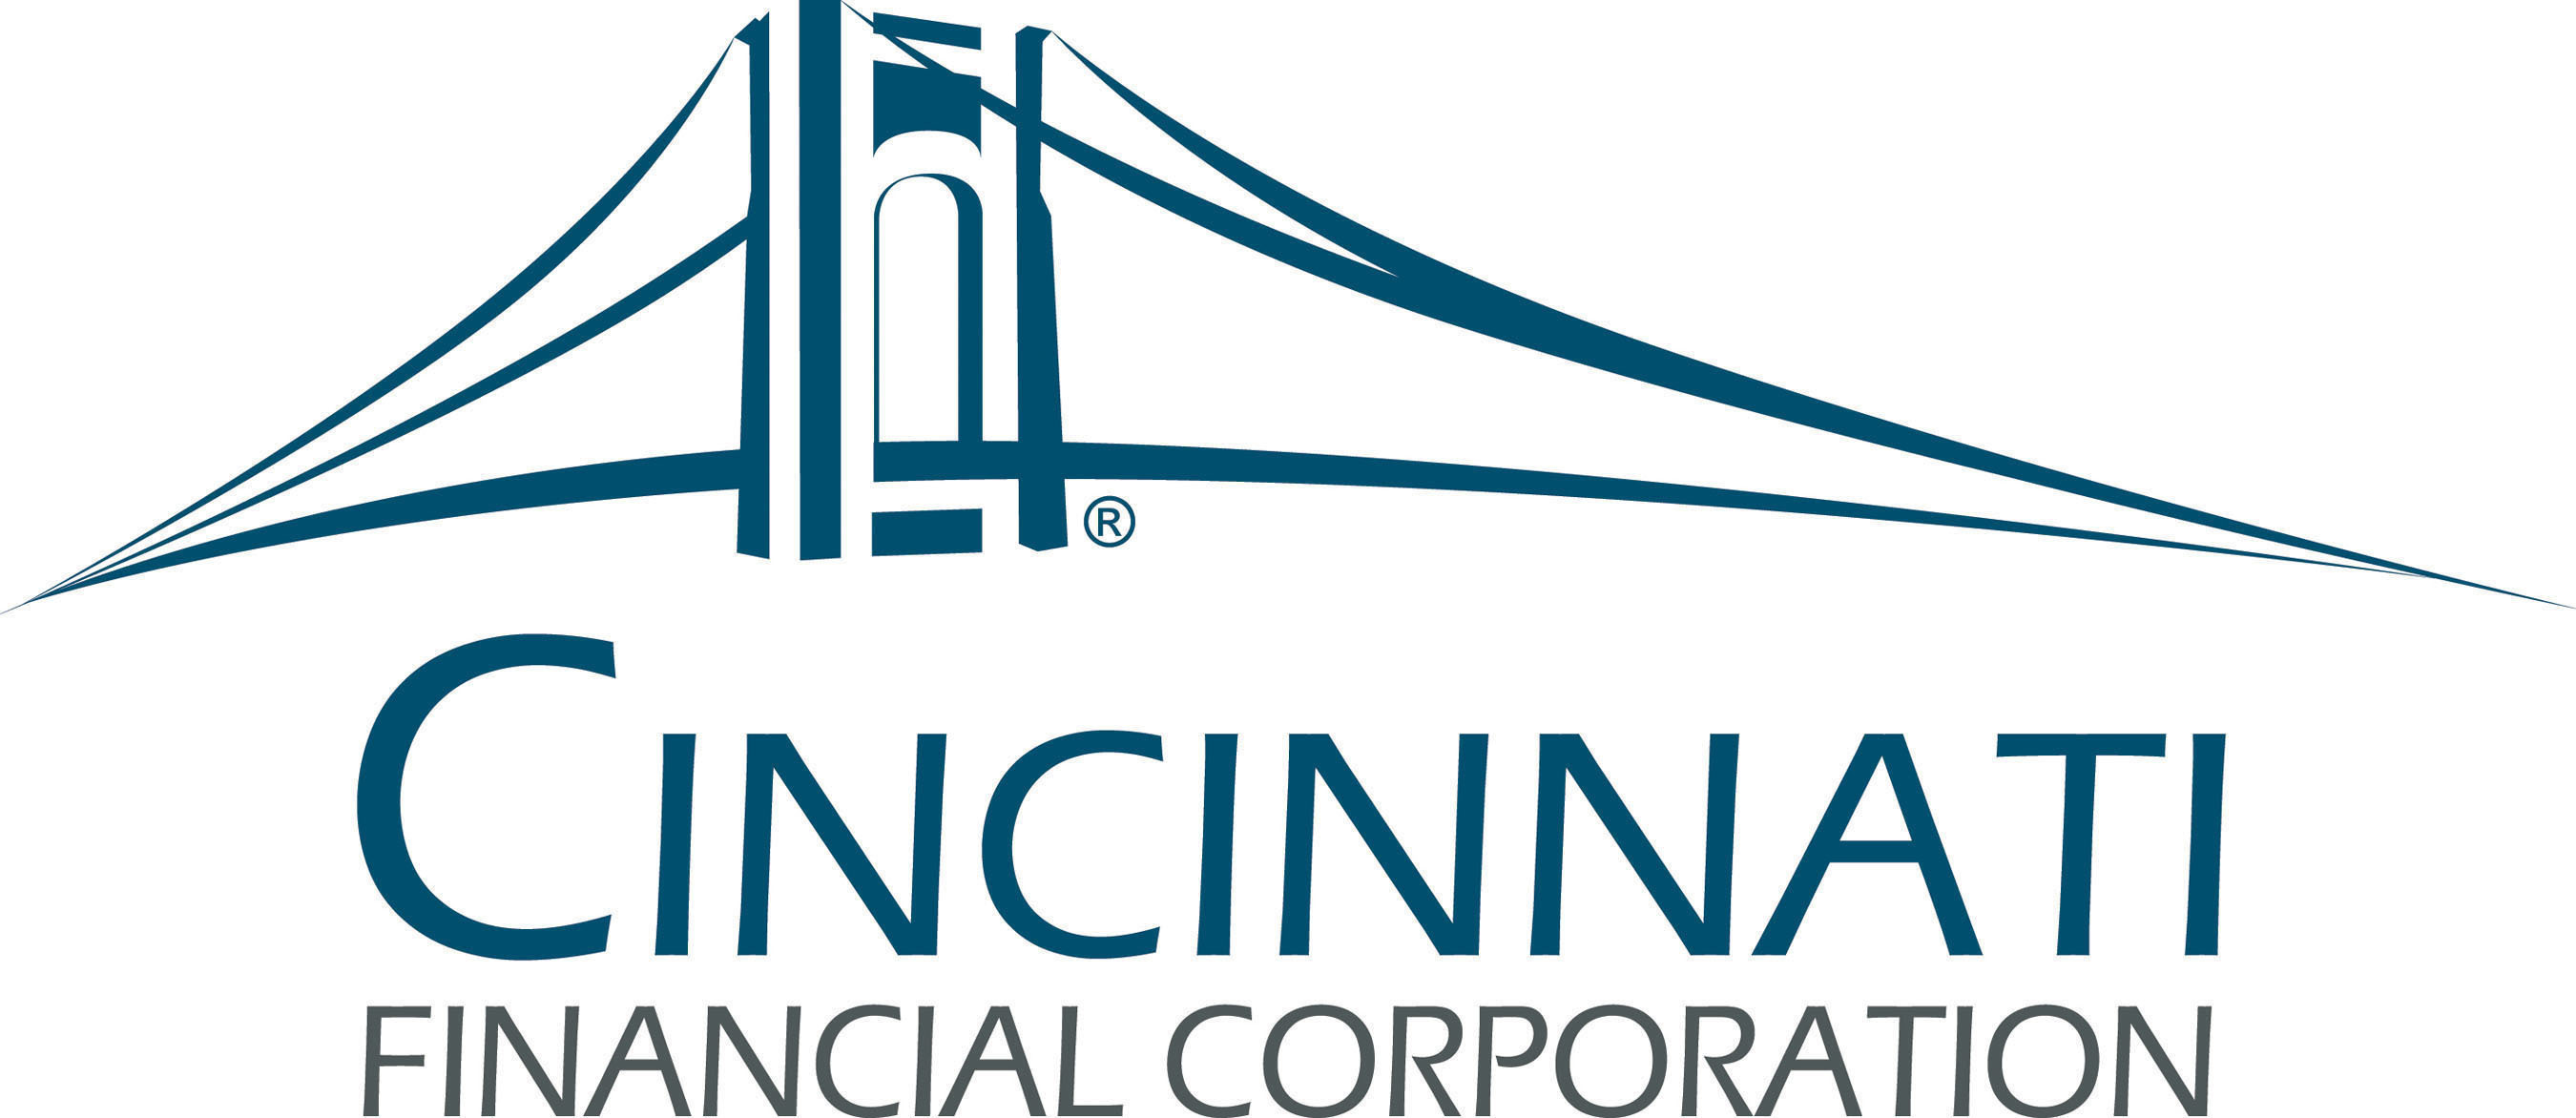 Cincinnati Financial Corporation logo. (PRNewsFoto/Cincinnati Financial Corporation)